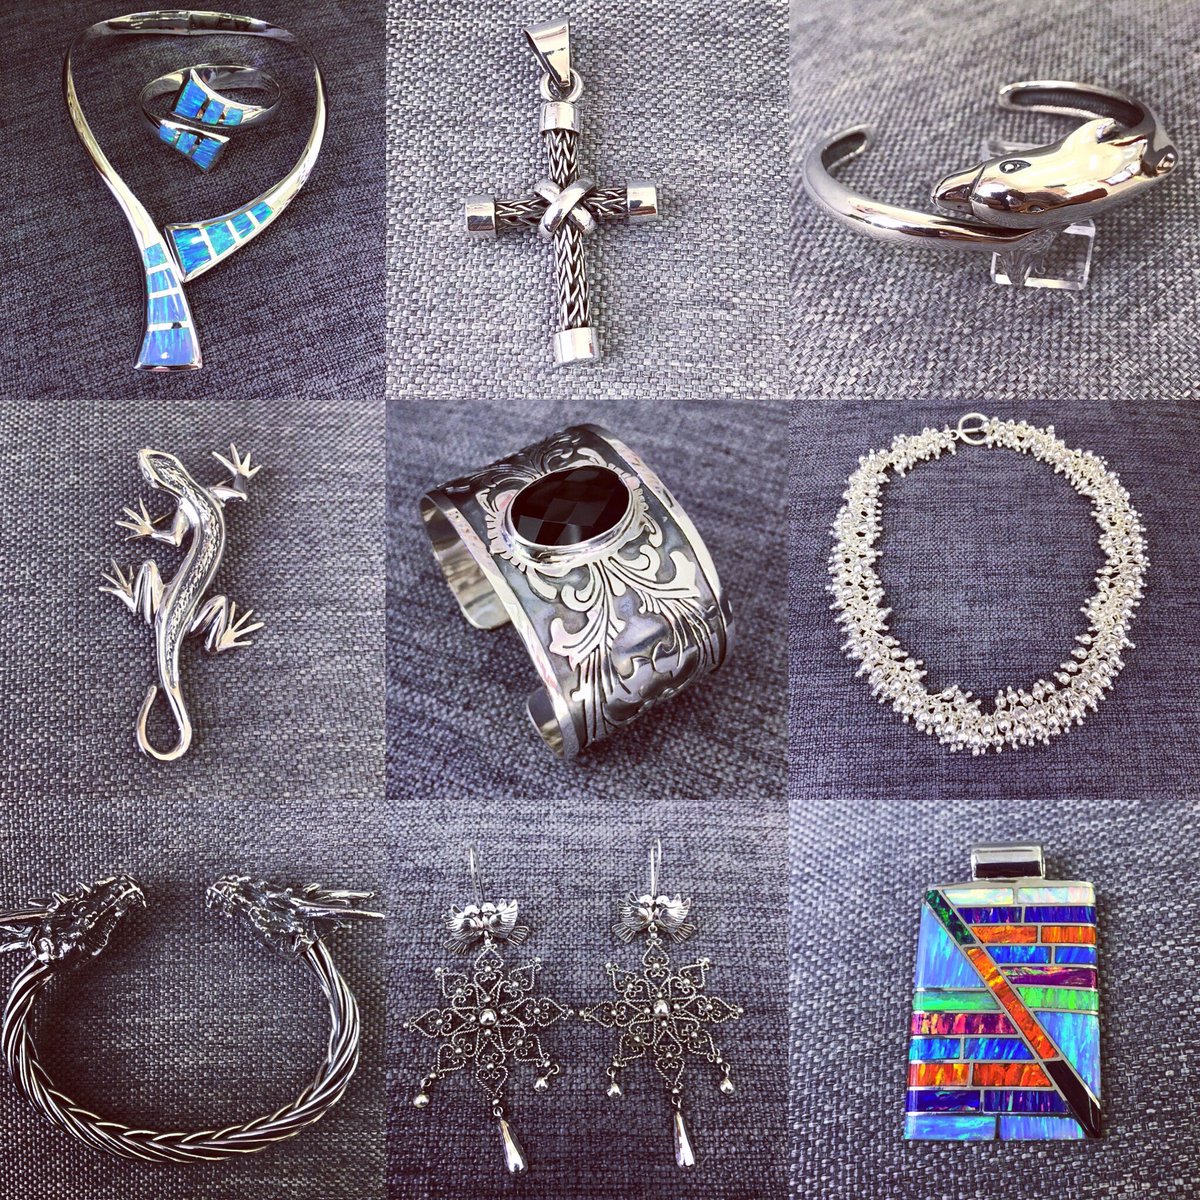 “I get many compliments when I wear my jewelry from Sergio’s”
.
sergiosilver.com

#sergiosilvercoz #sergiosilver #jewelryaddict #jewelrycollection #quality #silver #jewelry #women #style #glam #menjewellery #men #rings #pendant #necklace #bracelet #cozumel #shopping